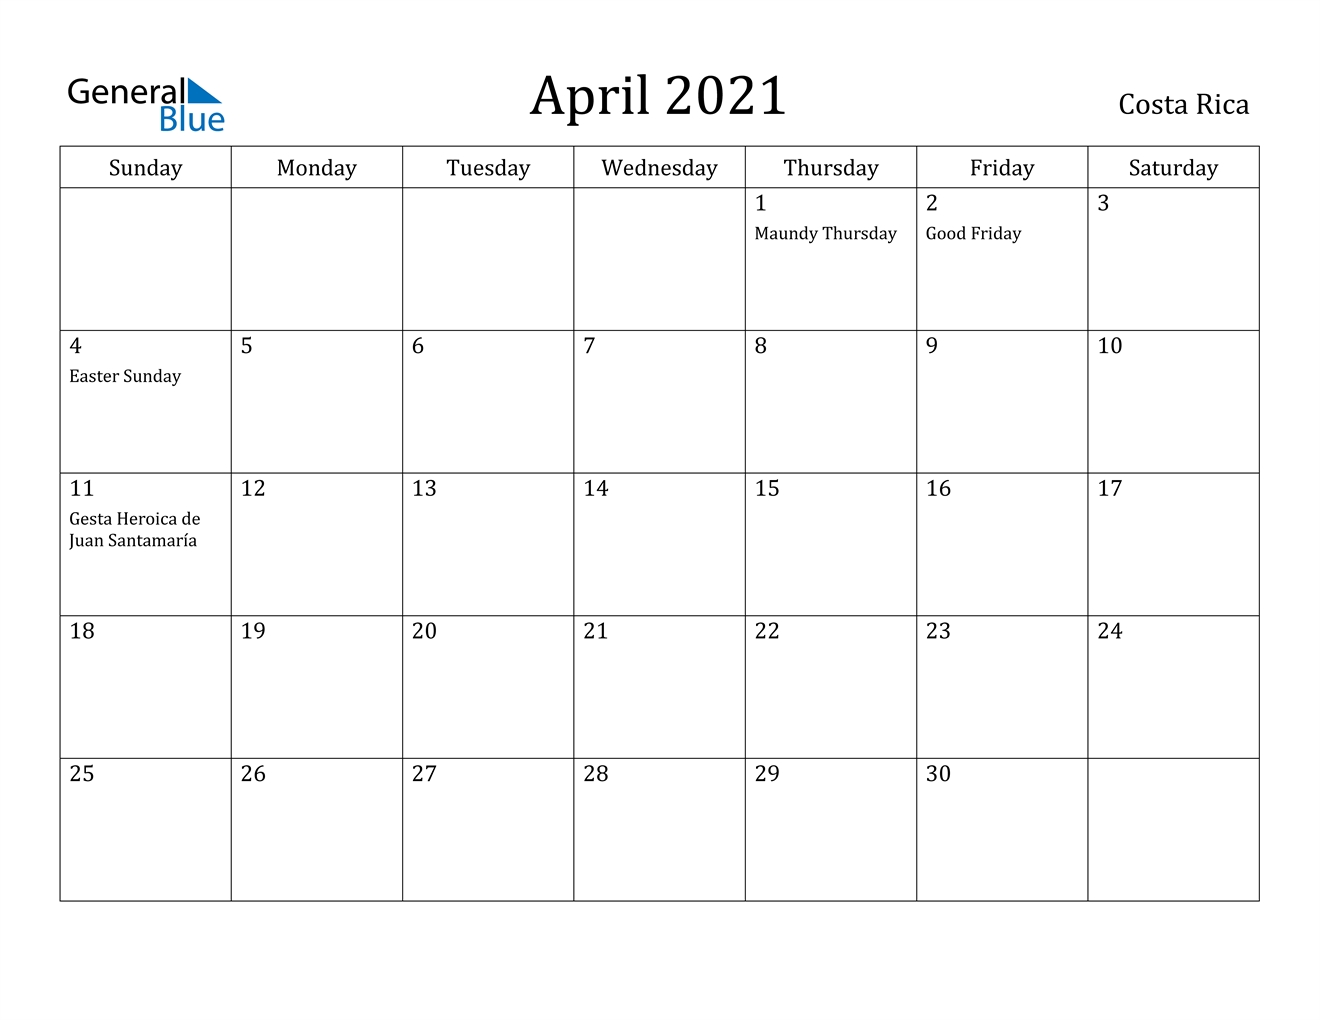 April 2021 Calendar - Costa Rica